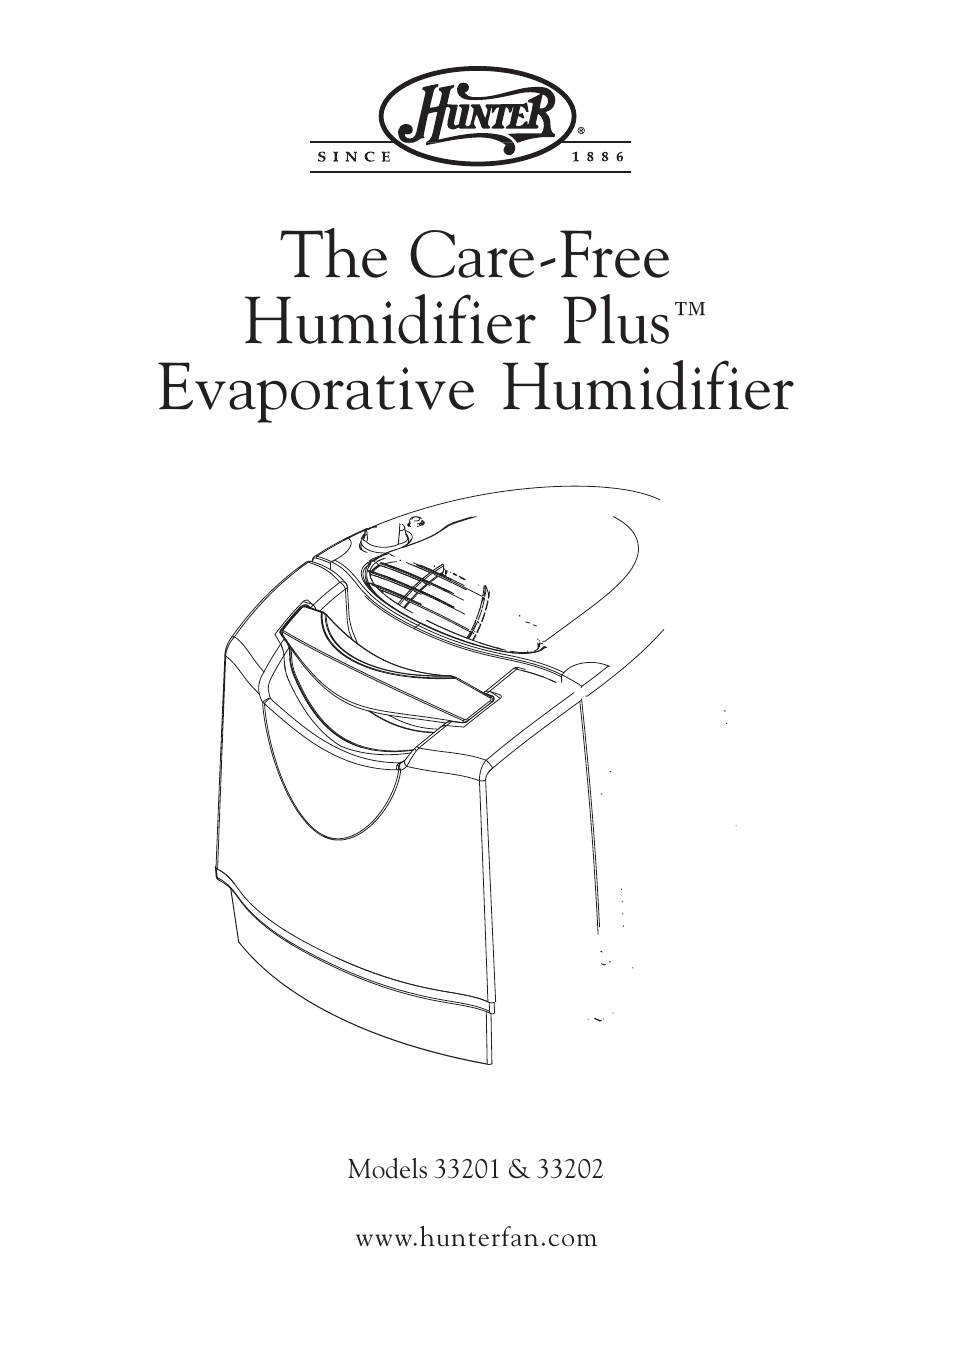 Kenmore evaporative humidifier 15420 user manual